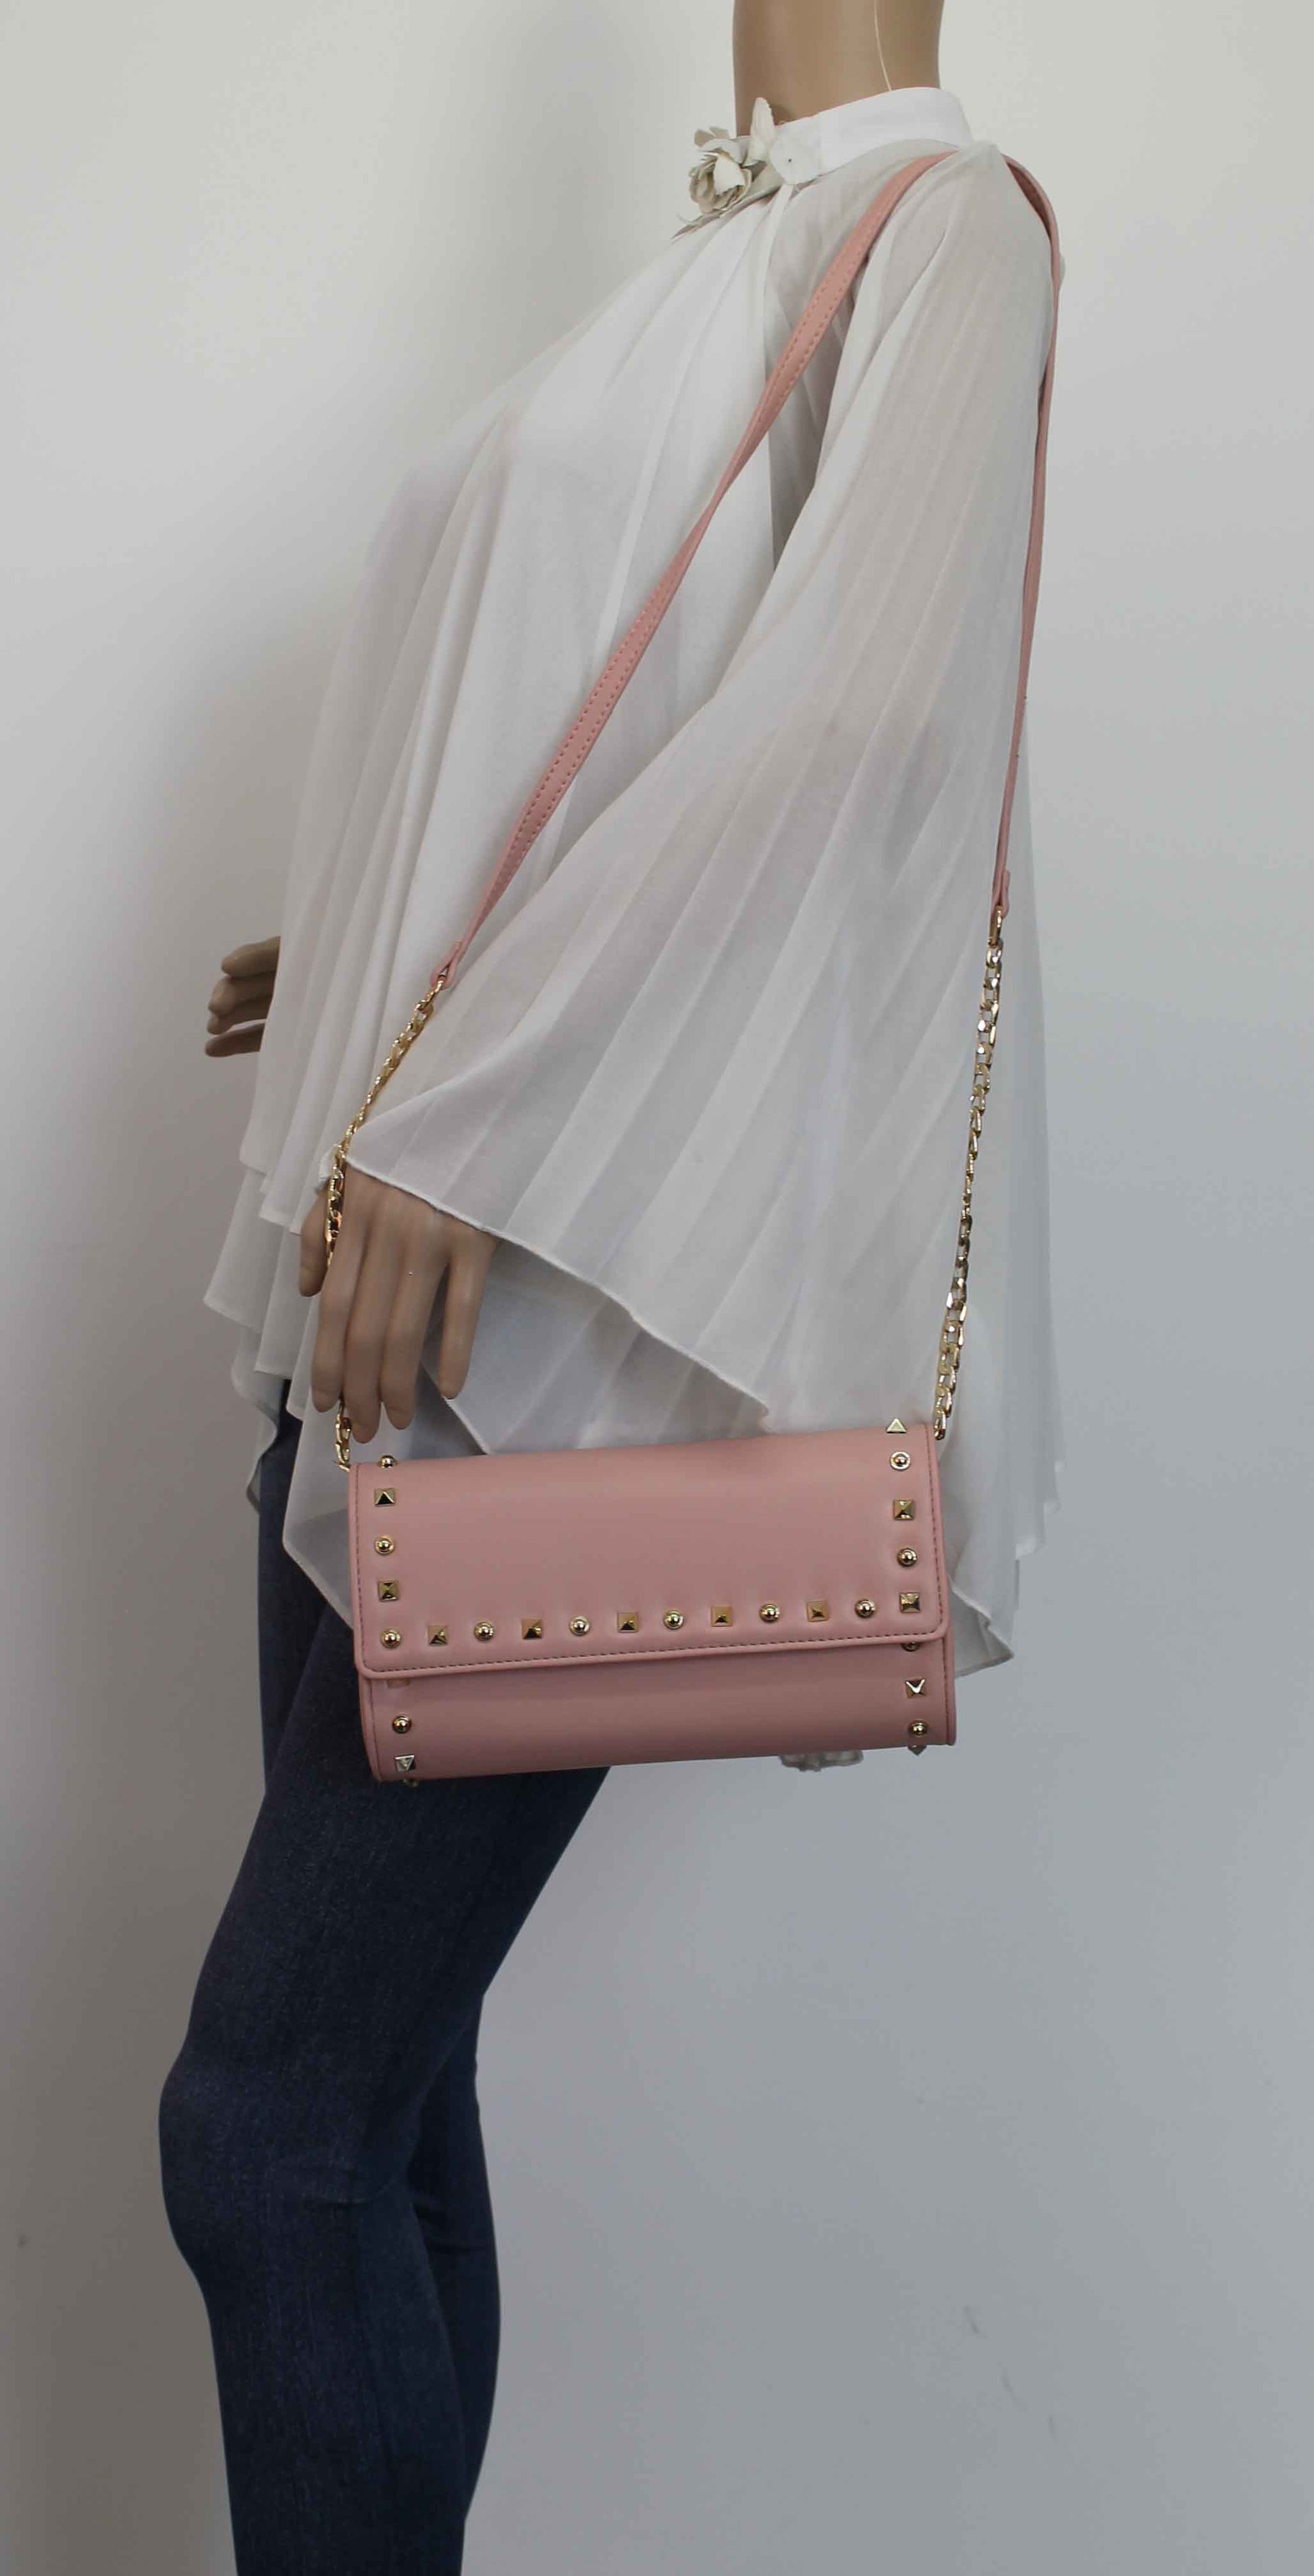 SWANKYSWANS Katie Clutch Bag Pink Cute Cheap Clutch Bag For Weddings School and Work